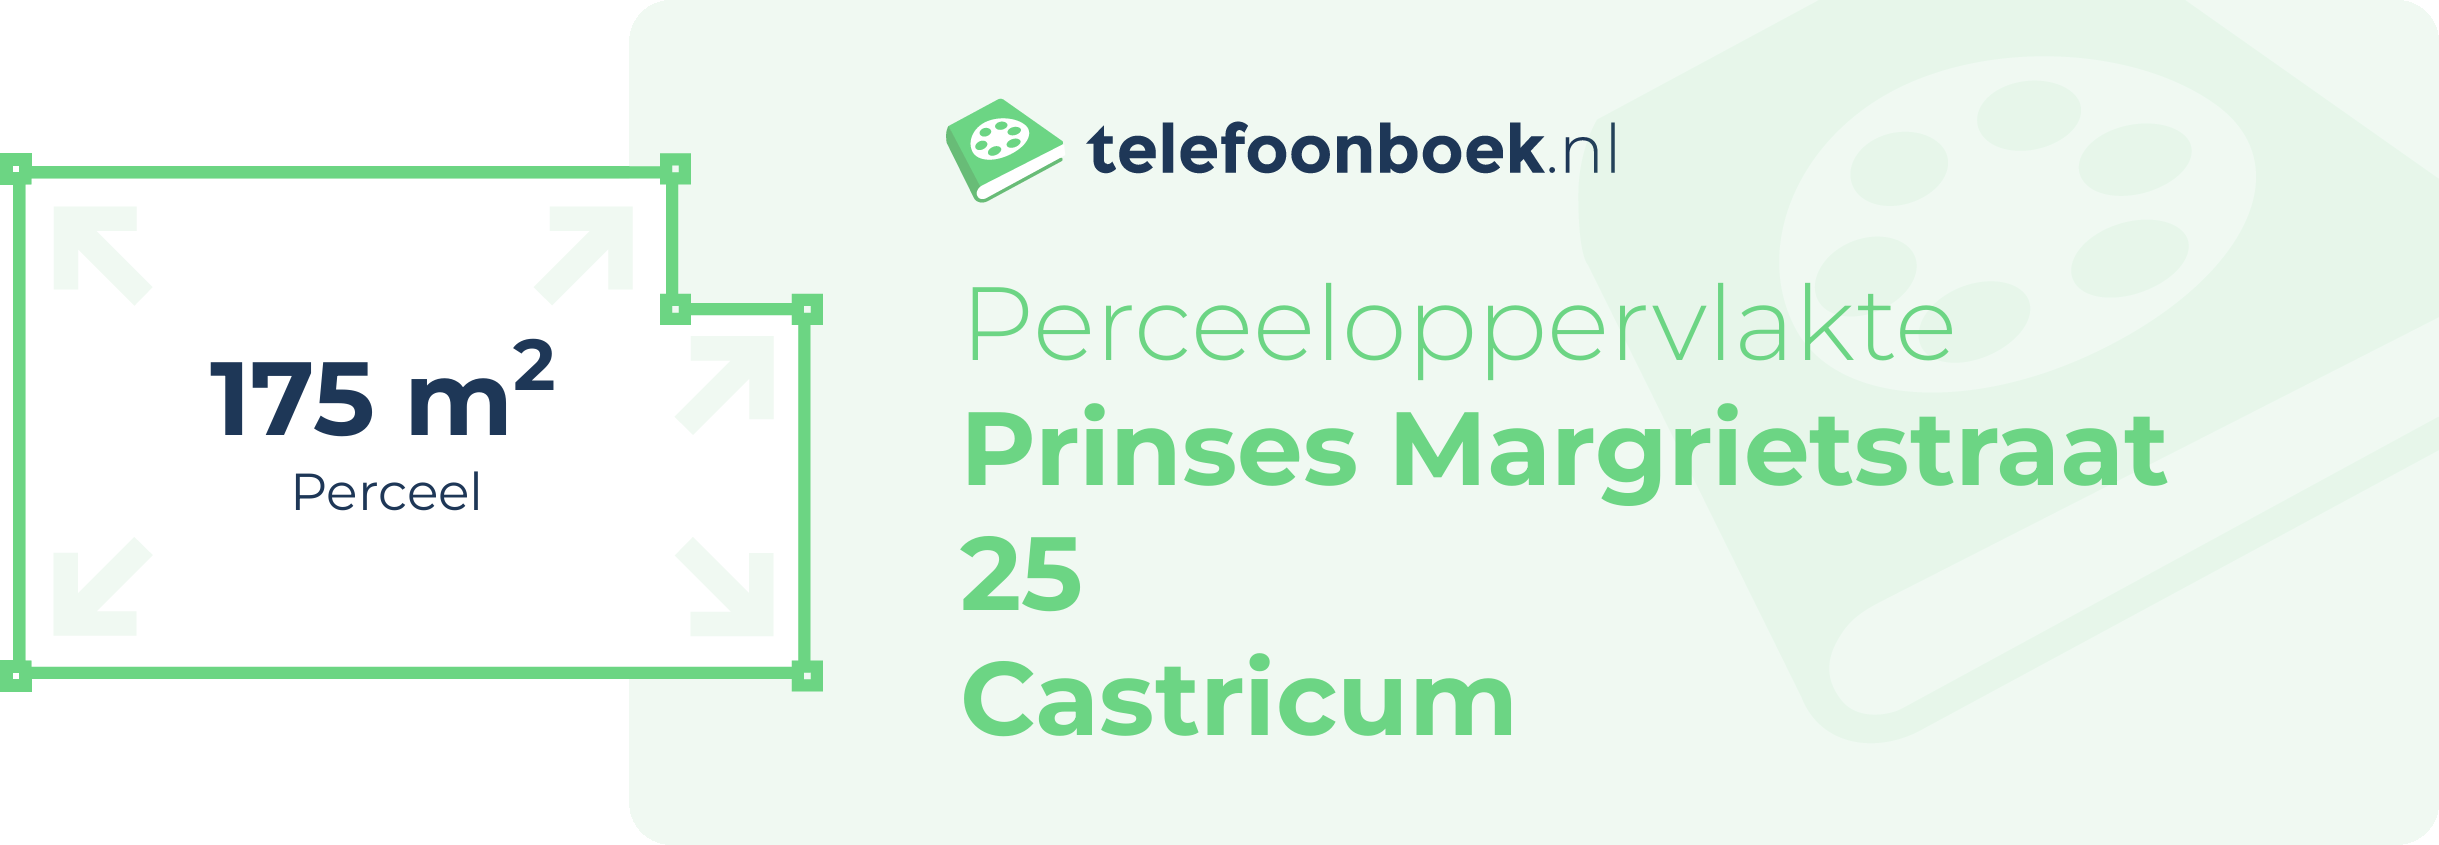 Perceeloppervlakte Prinses Margrietstraat 25 Castricum